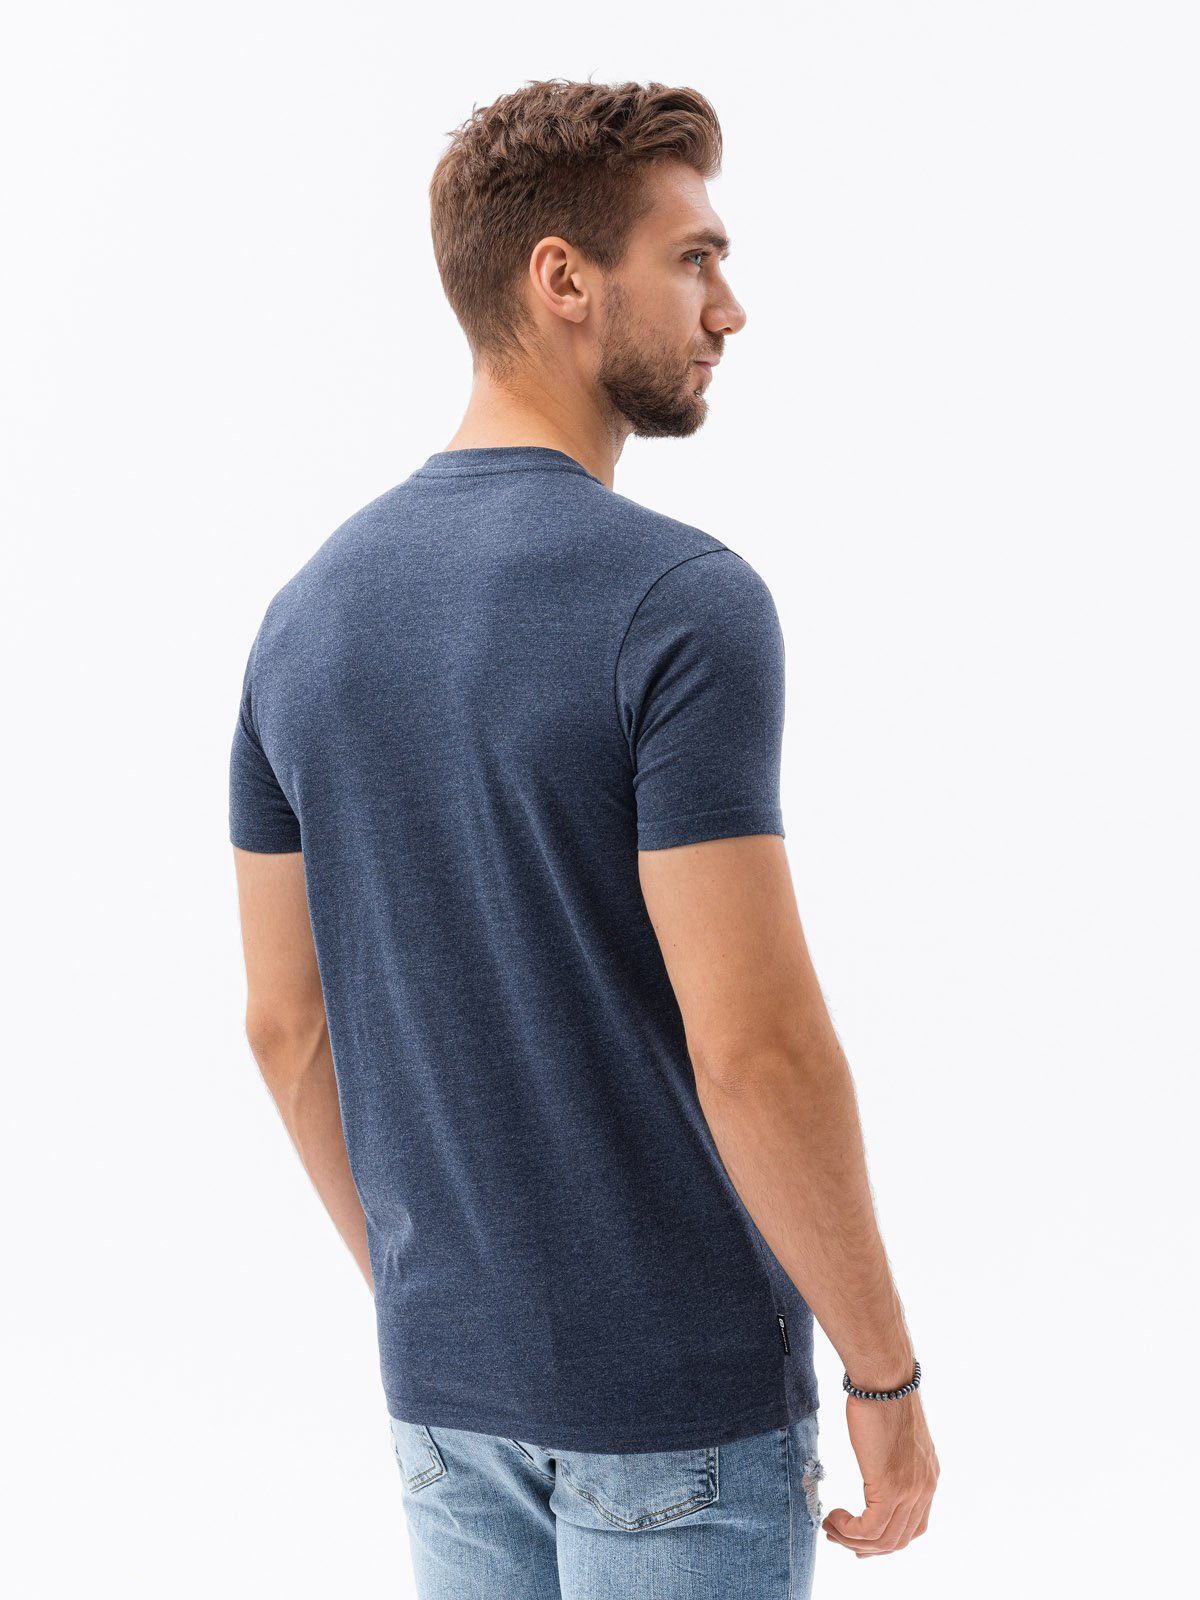 marineblau OMBRE Herren-T-Shirt Unifarbenes T-Shirt S1390 L -